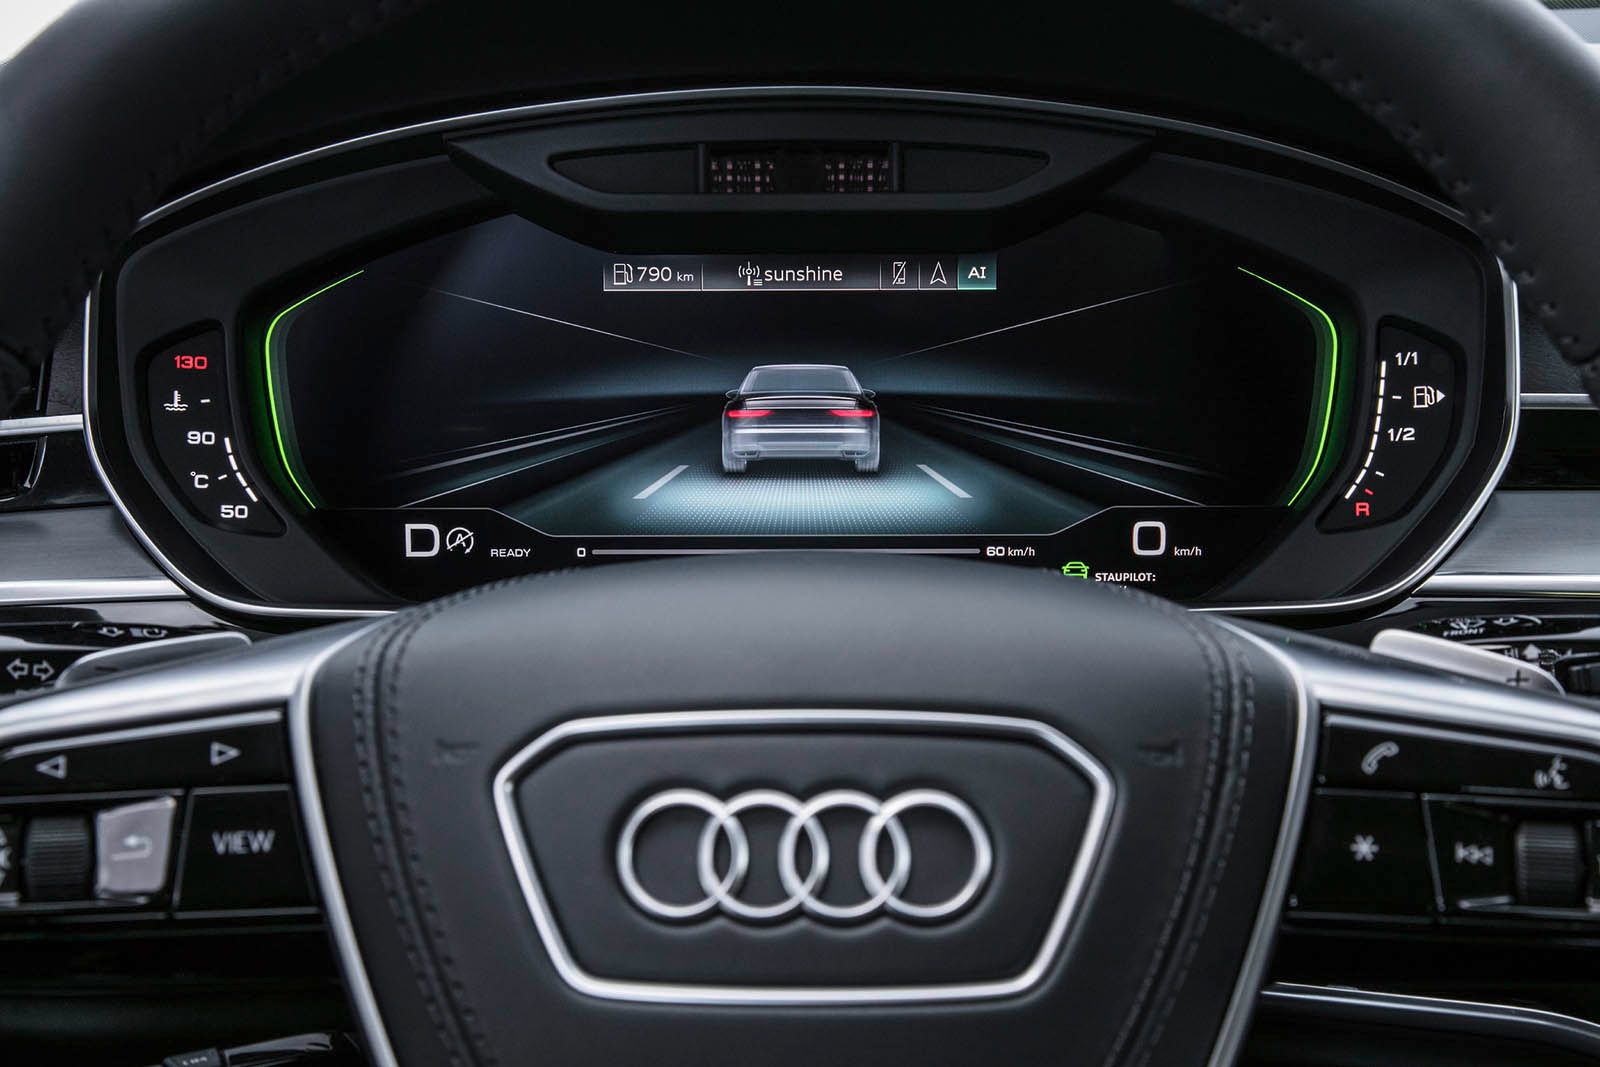 Audi Traffic Jam Pilot autonomous driving image 4